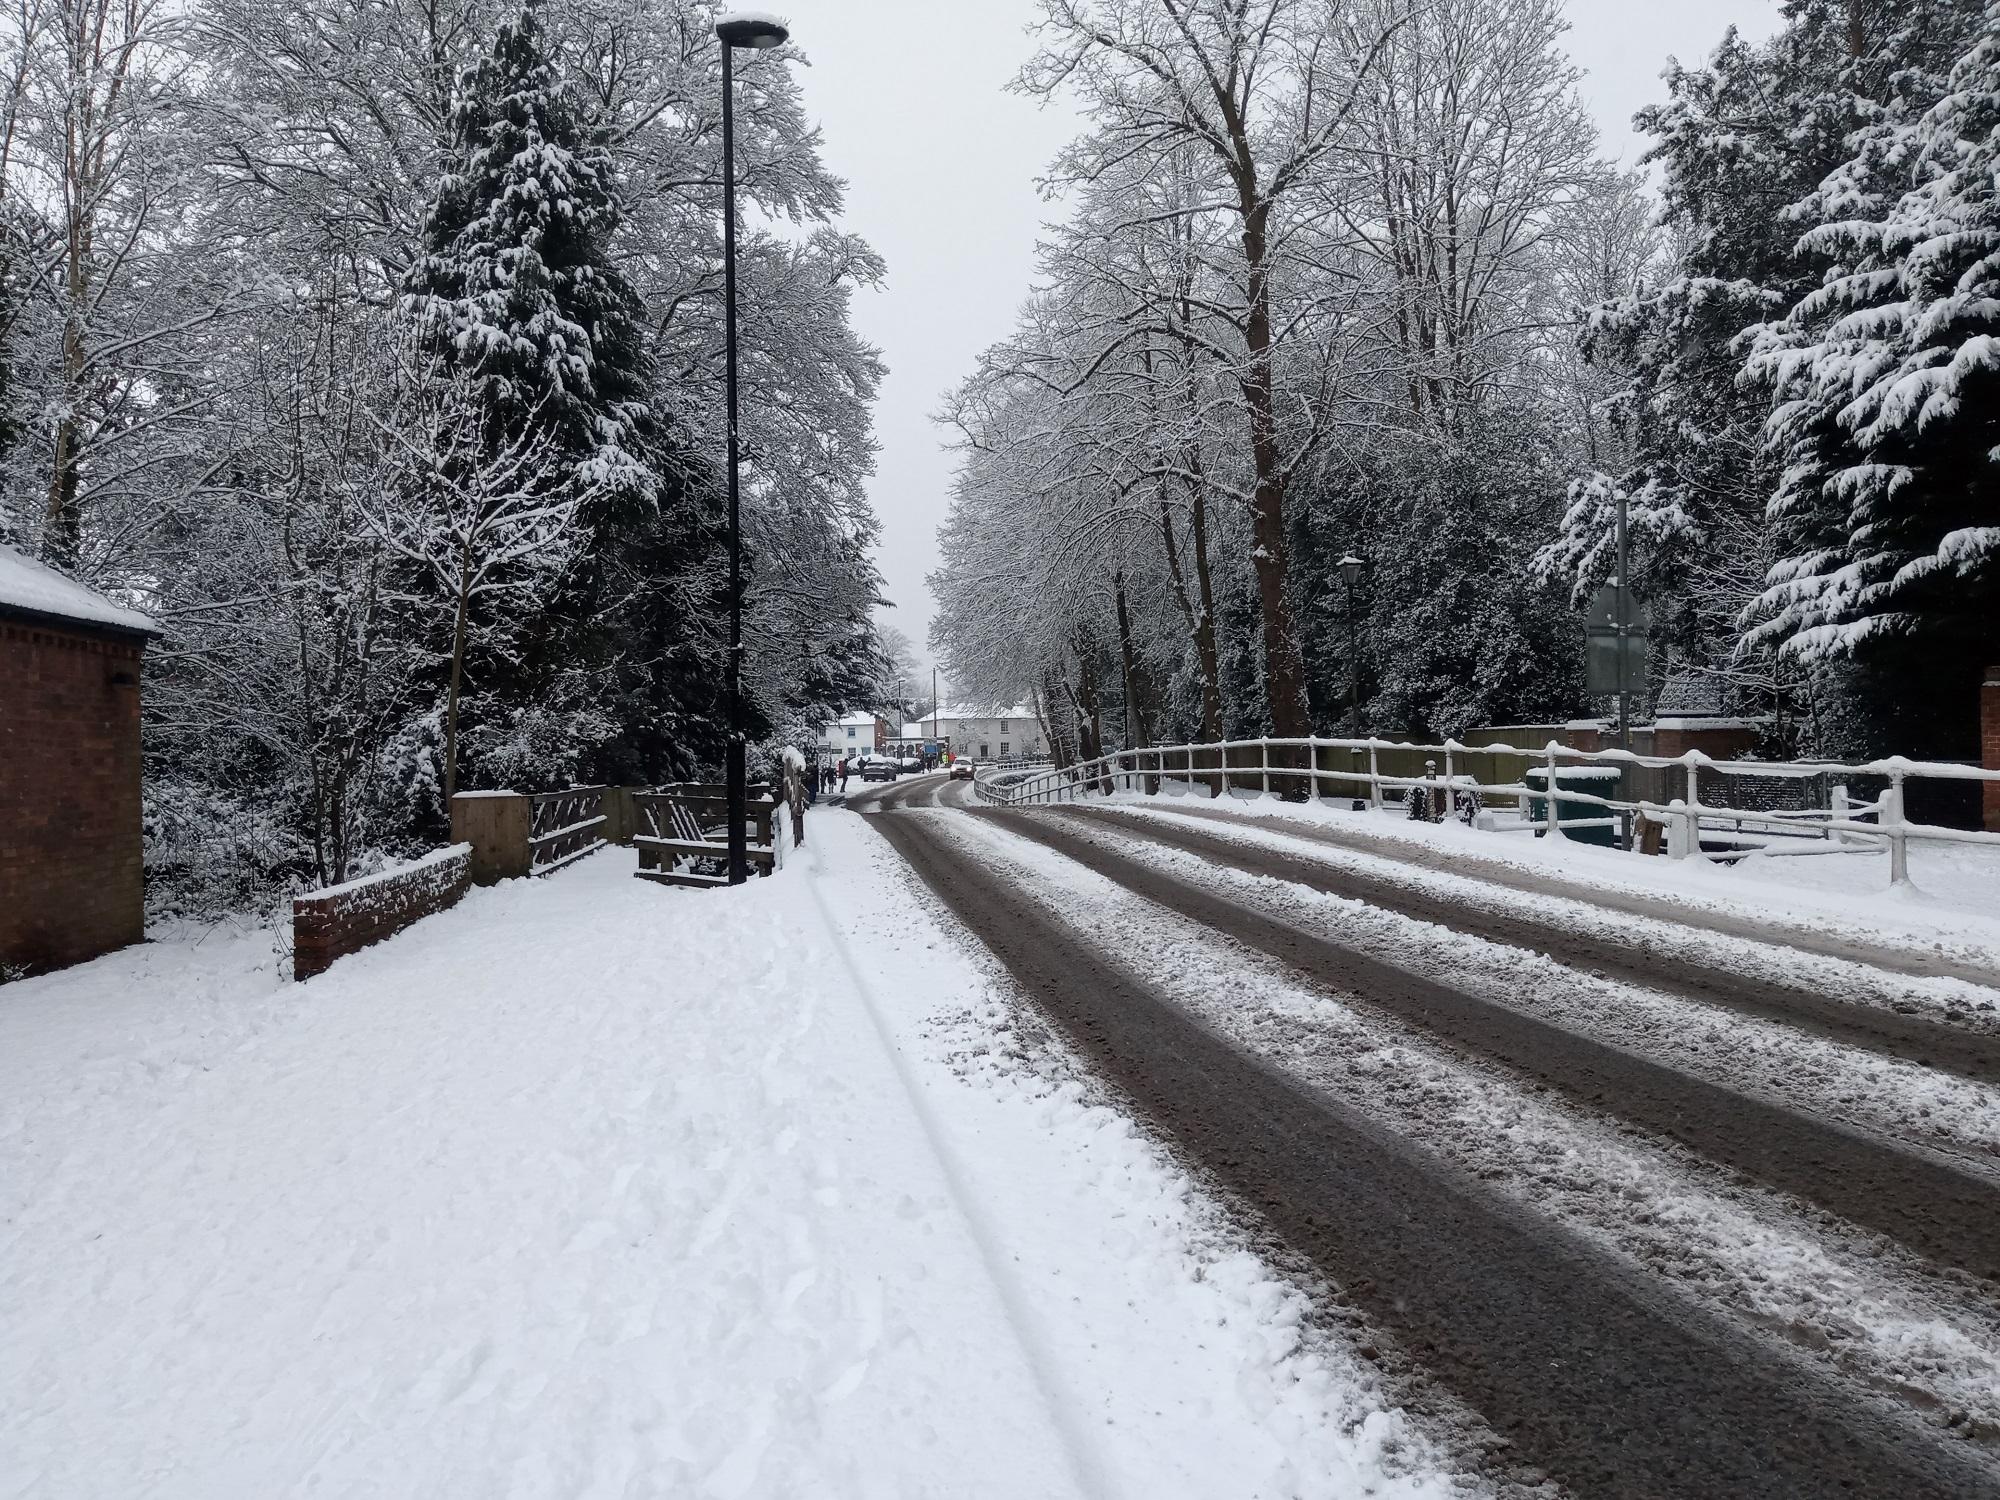 Chobham high road in snow